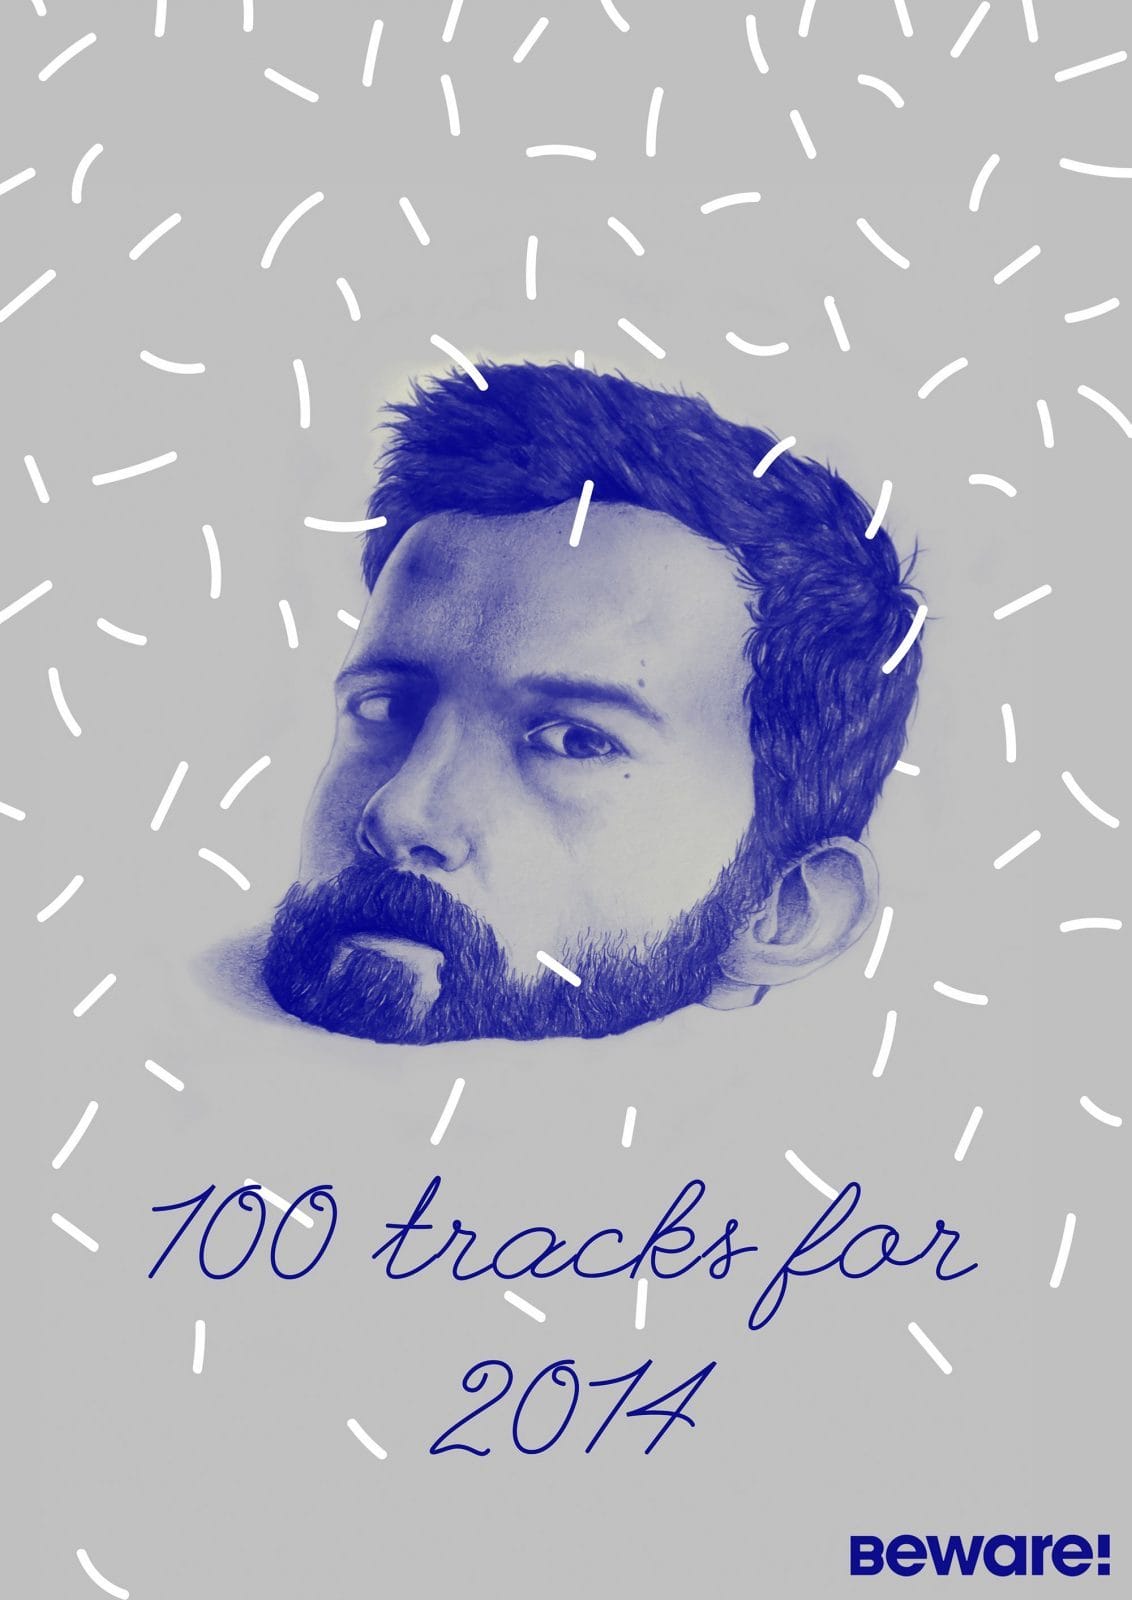 100 tracks for 2014